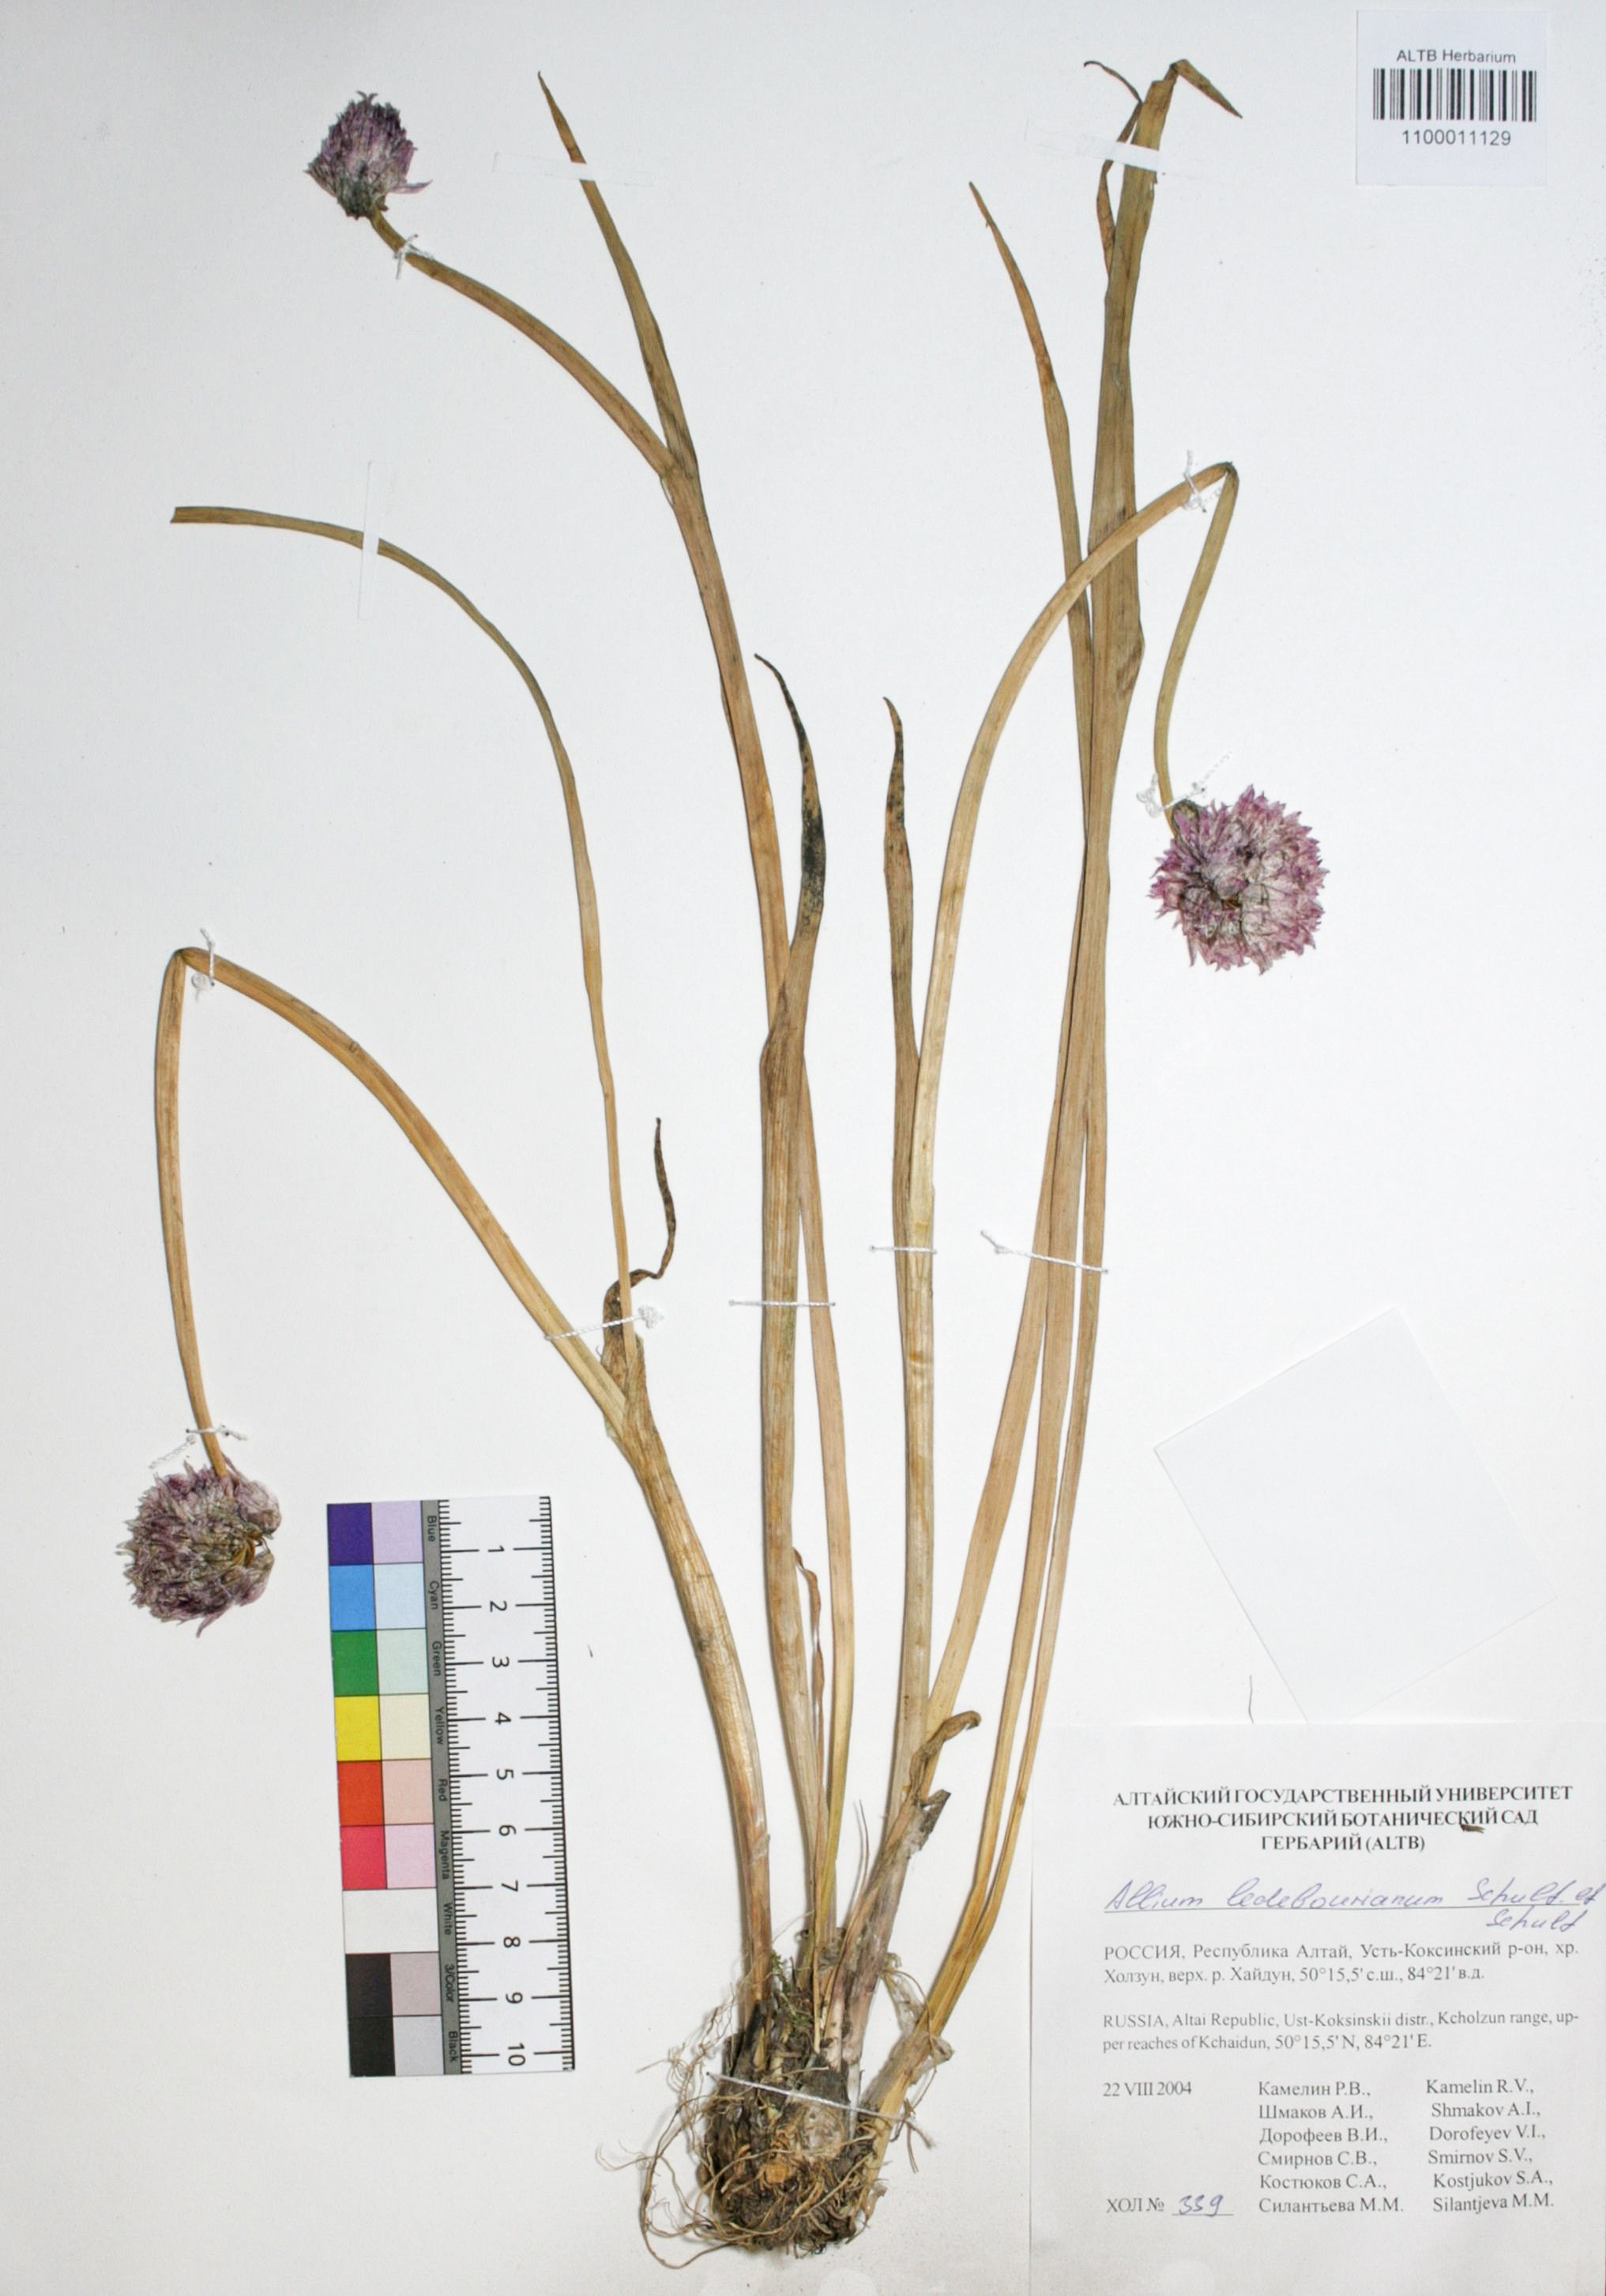 Allium ledebourianum Schulf. ef Schulf.